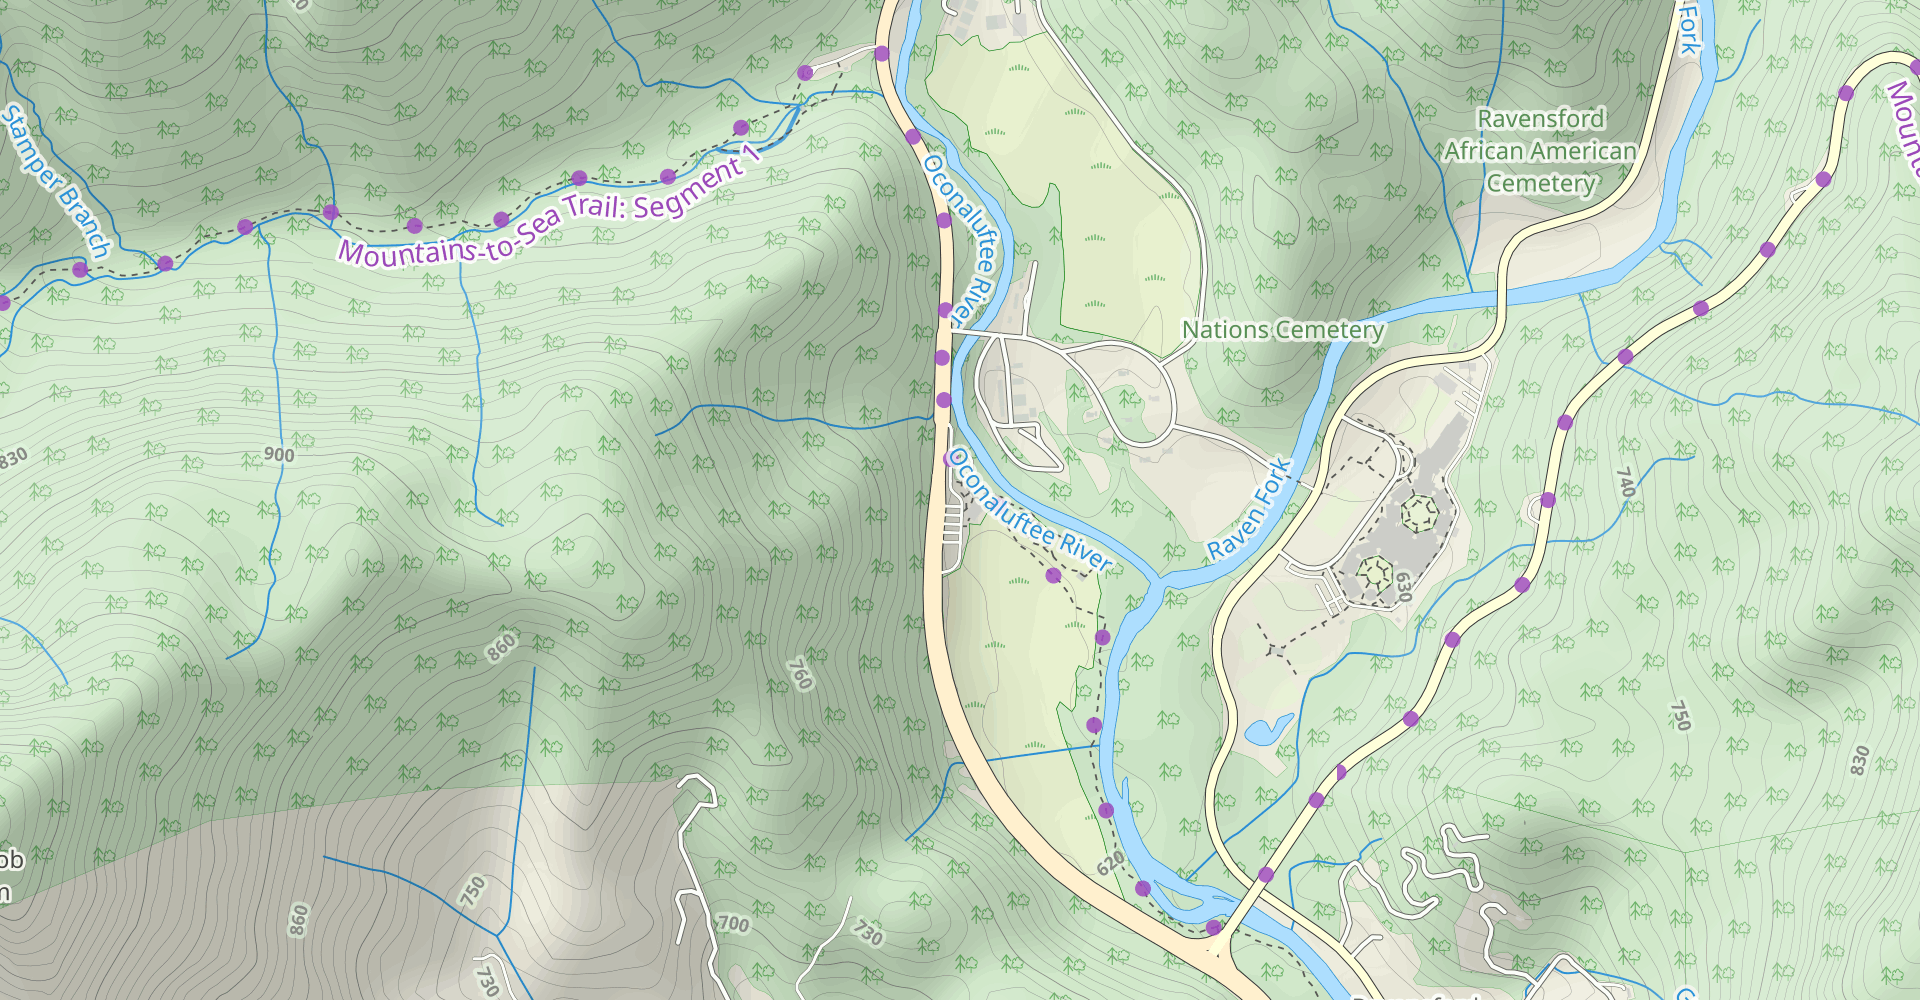 Oconaluftee River Trail